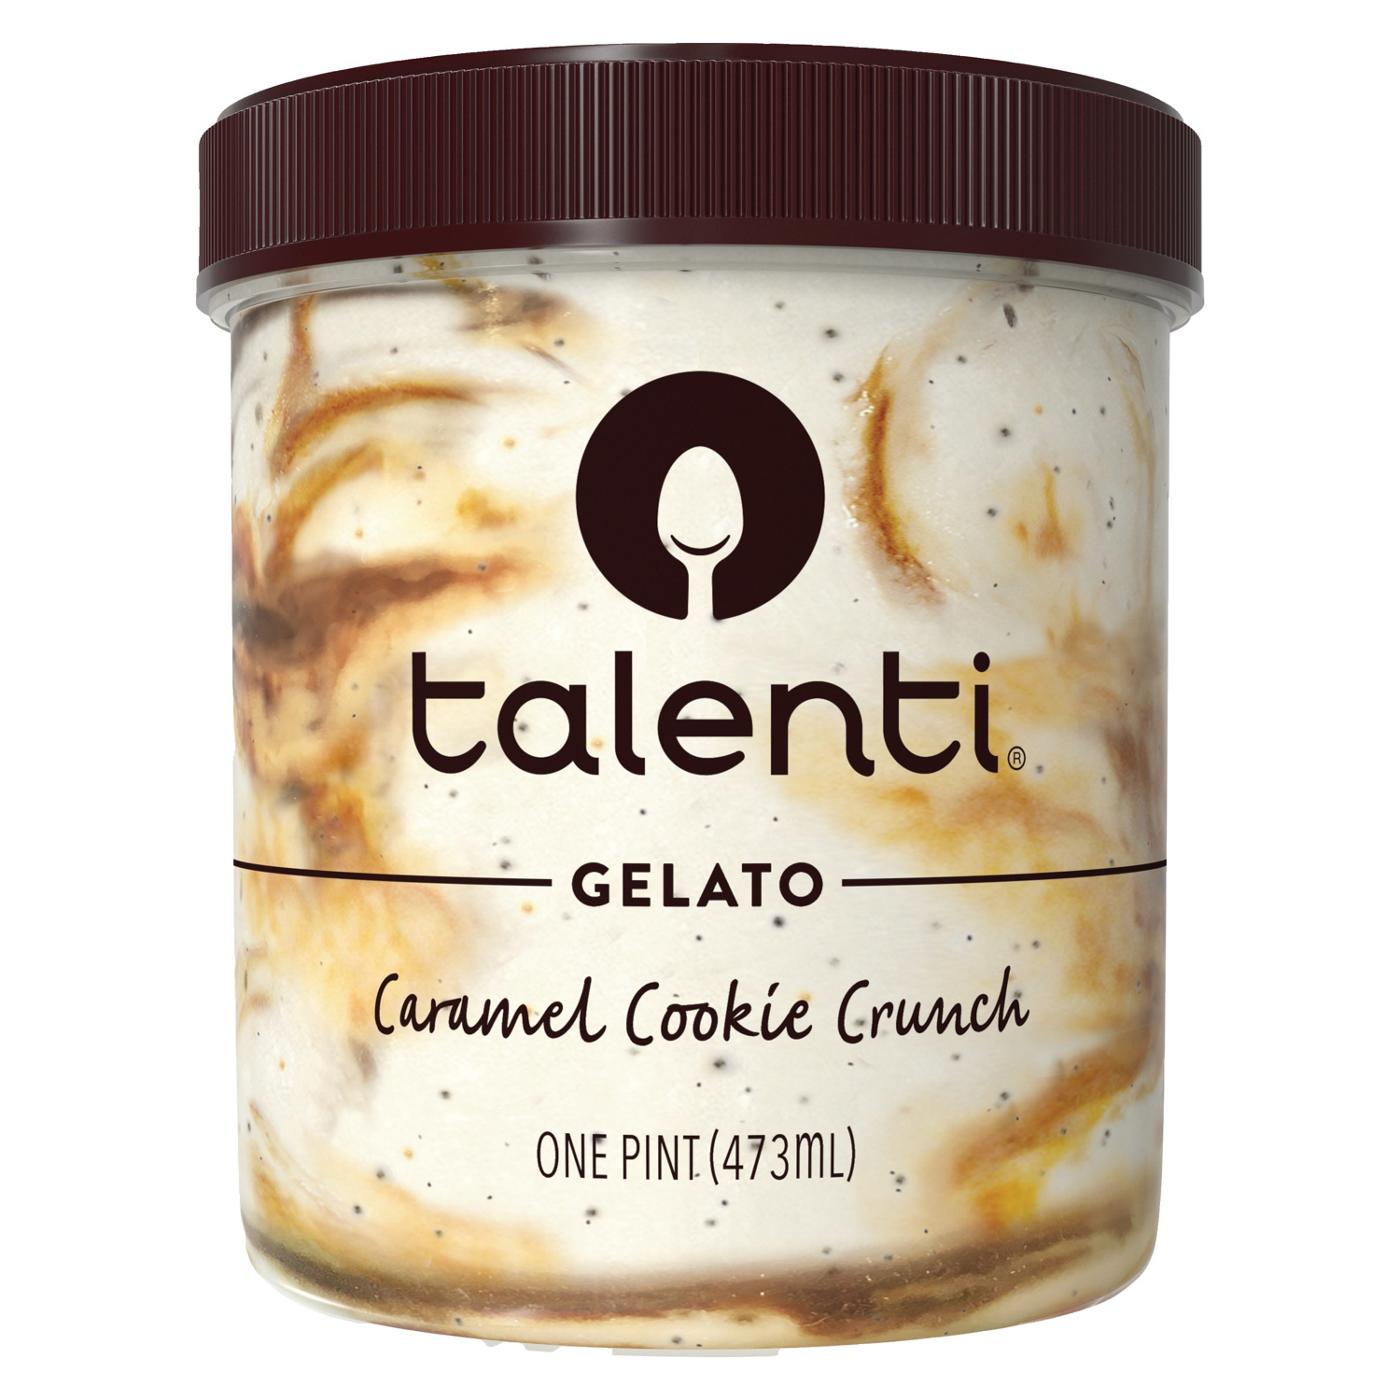 Talenti Caramel Cookie Crunch Gelato; image 1 of 3